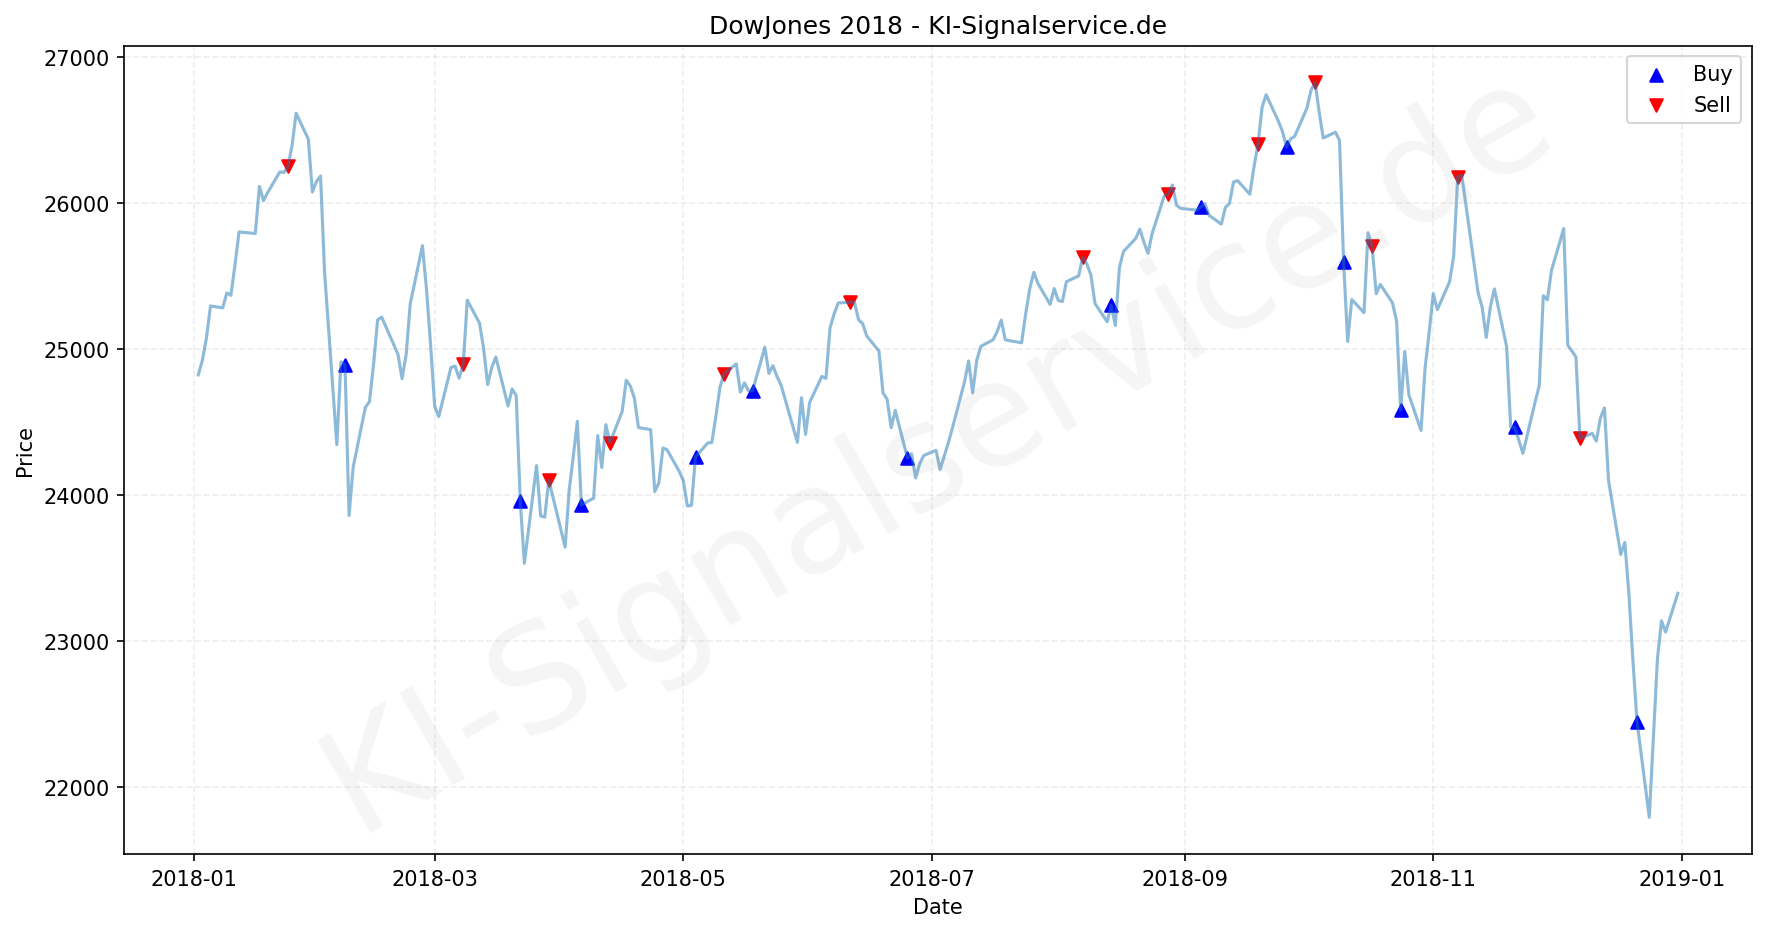 DOWJONES Index Performance Chart - KI Tradingsignale 2018